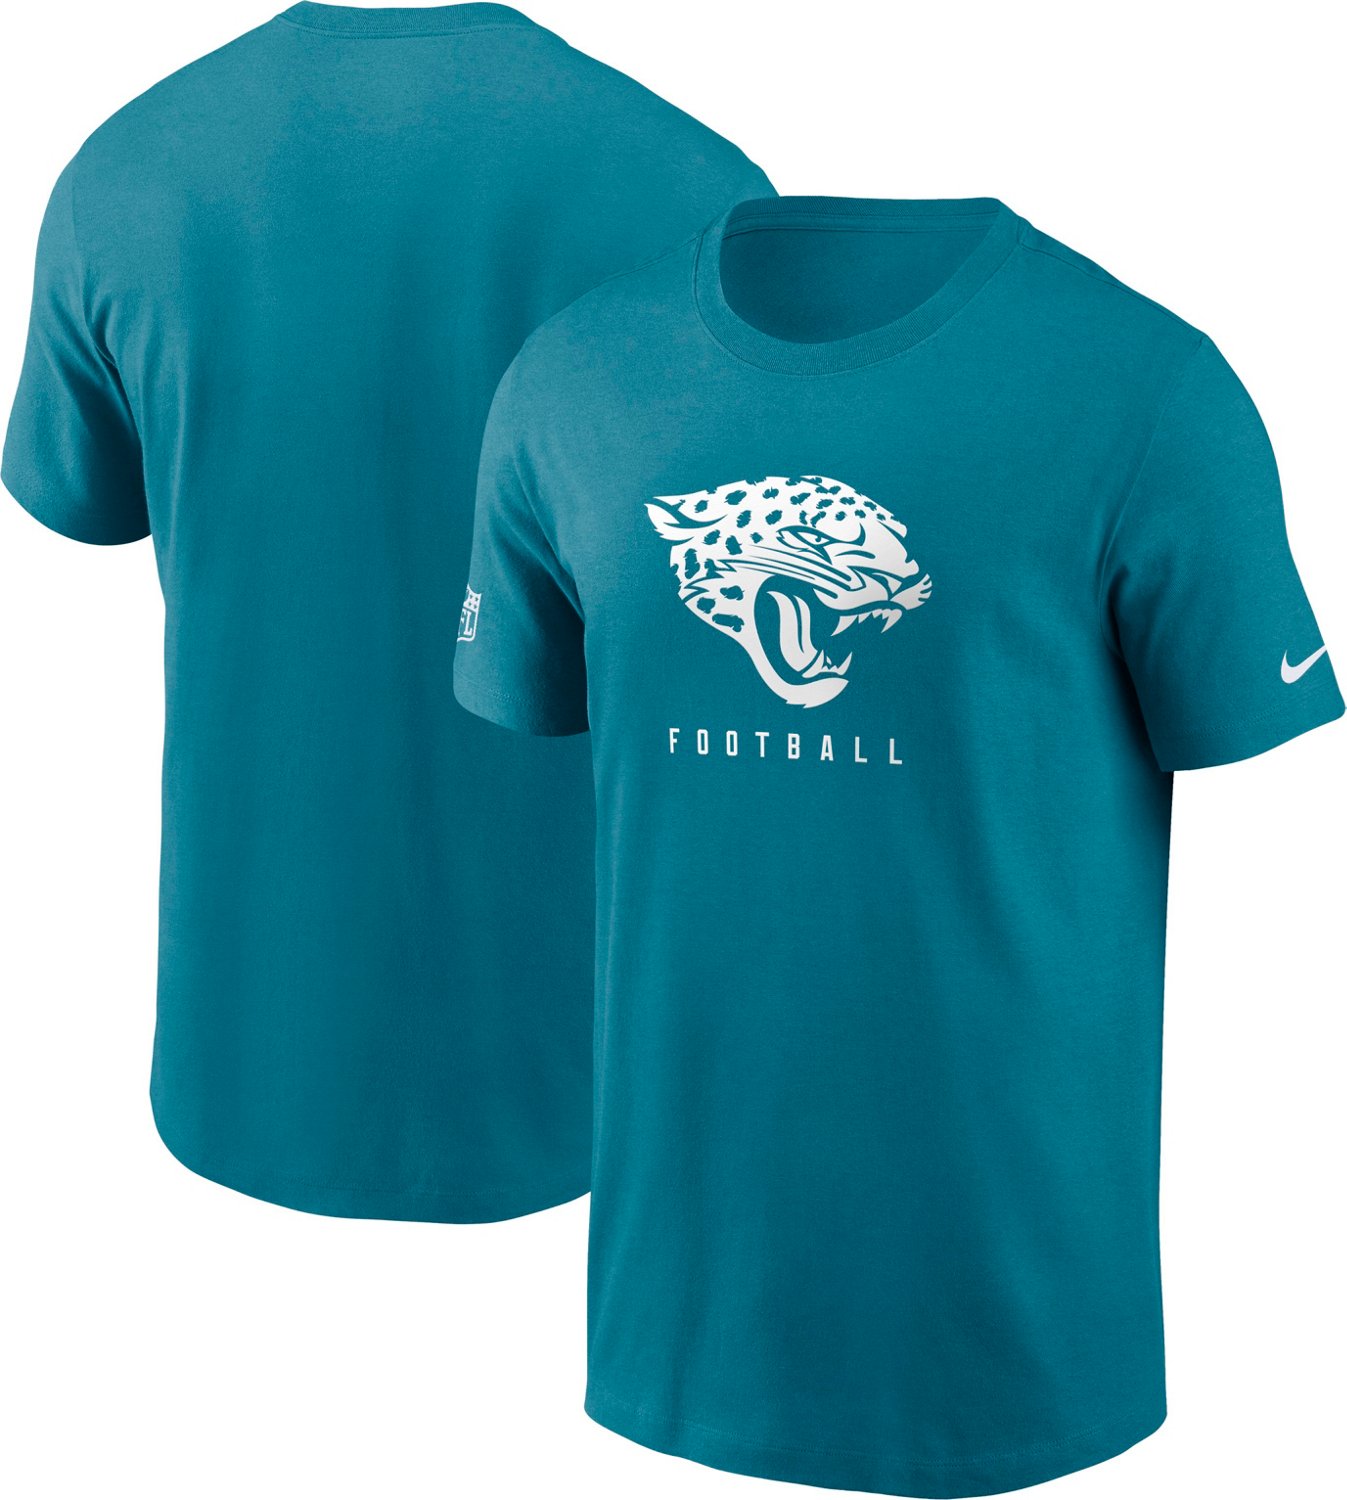 Nike Men's Jacksonville Jaguars Team Issue Dri-FIT T-shirt